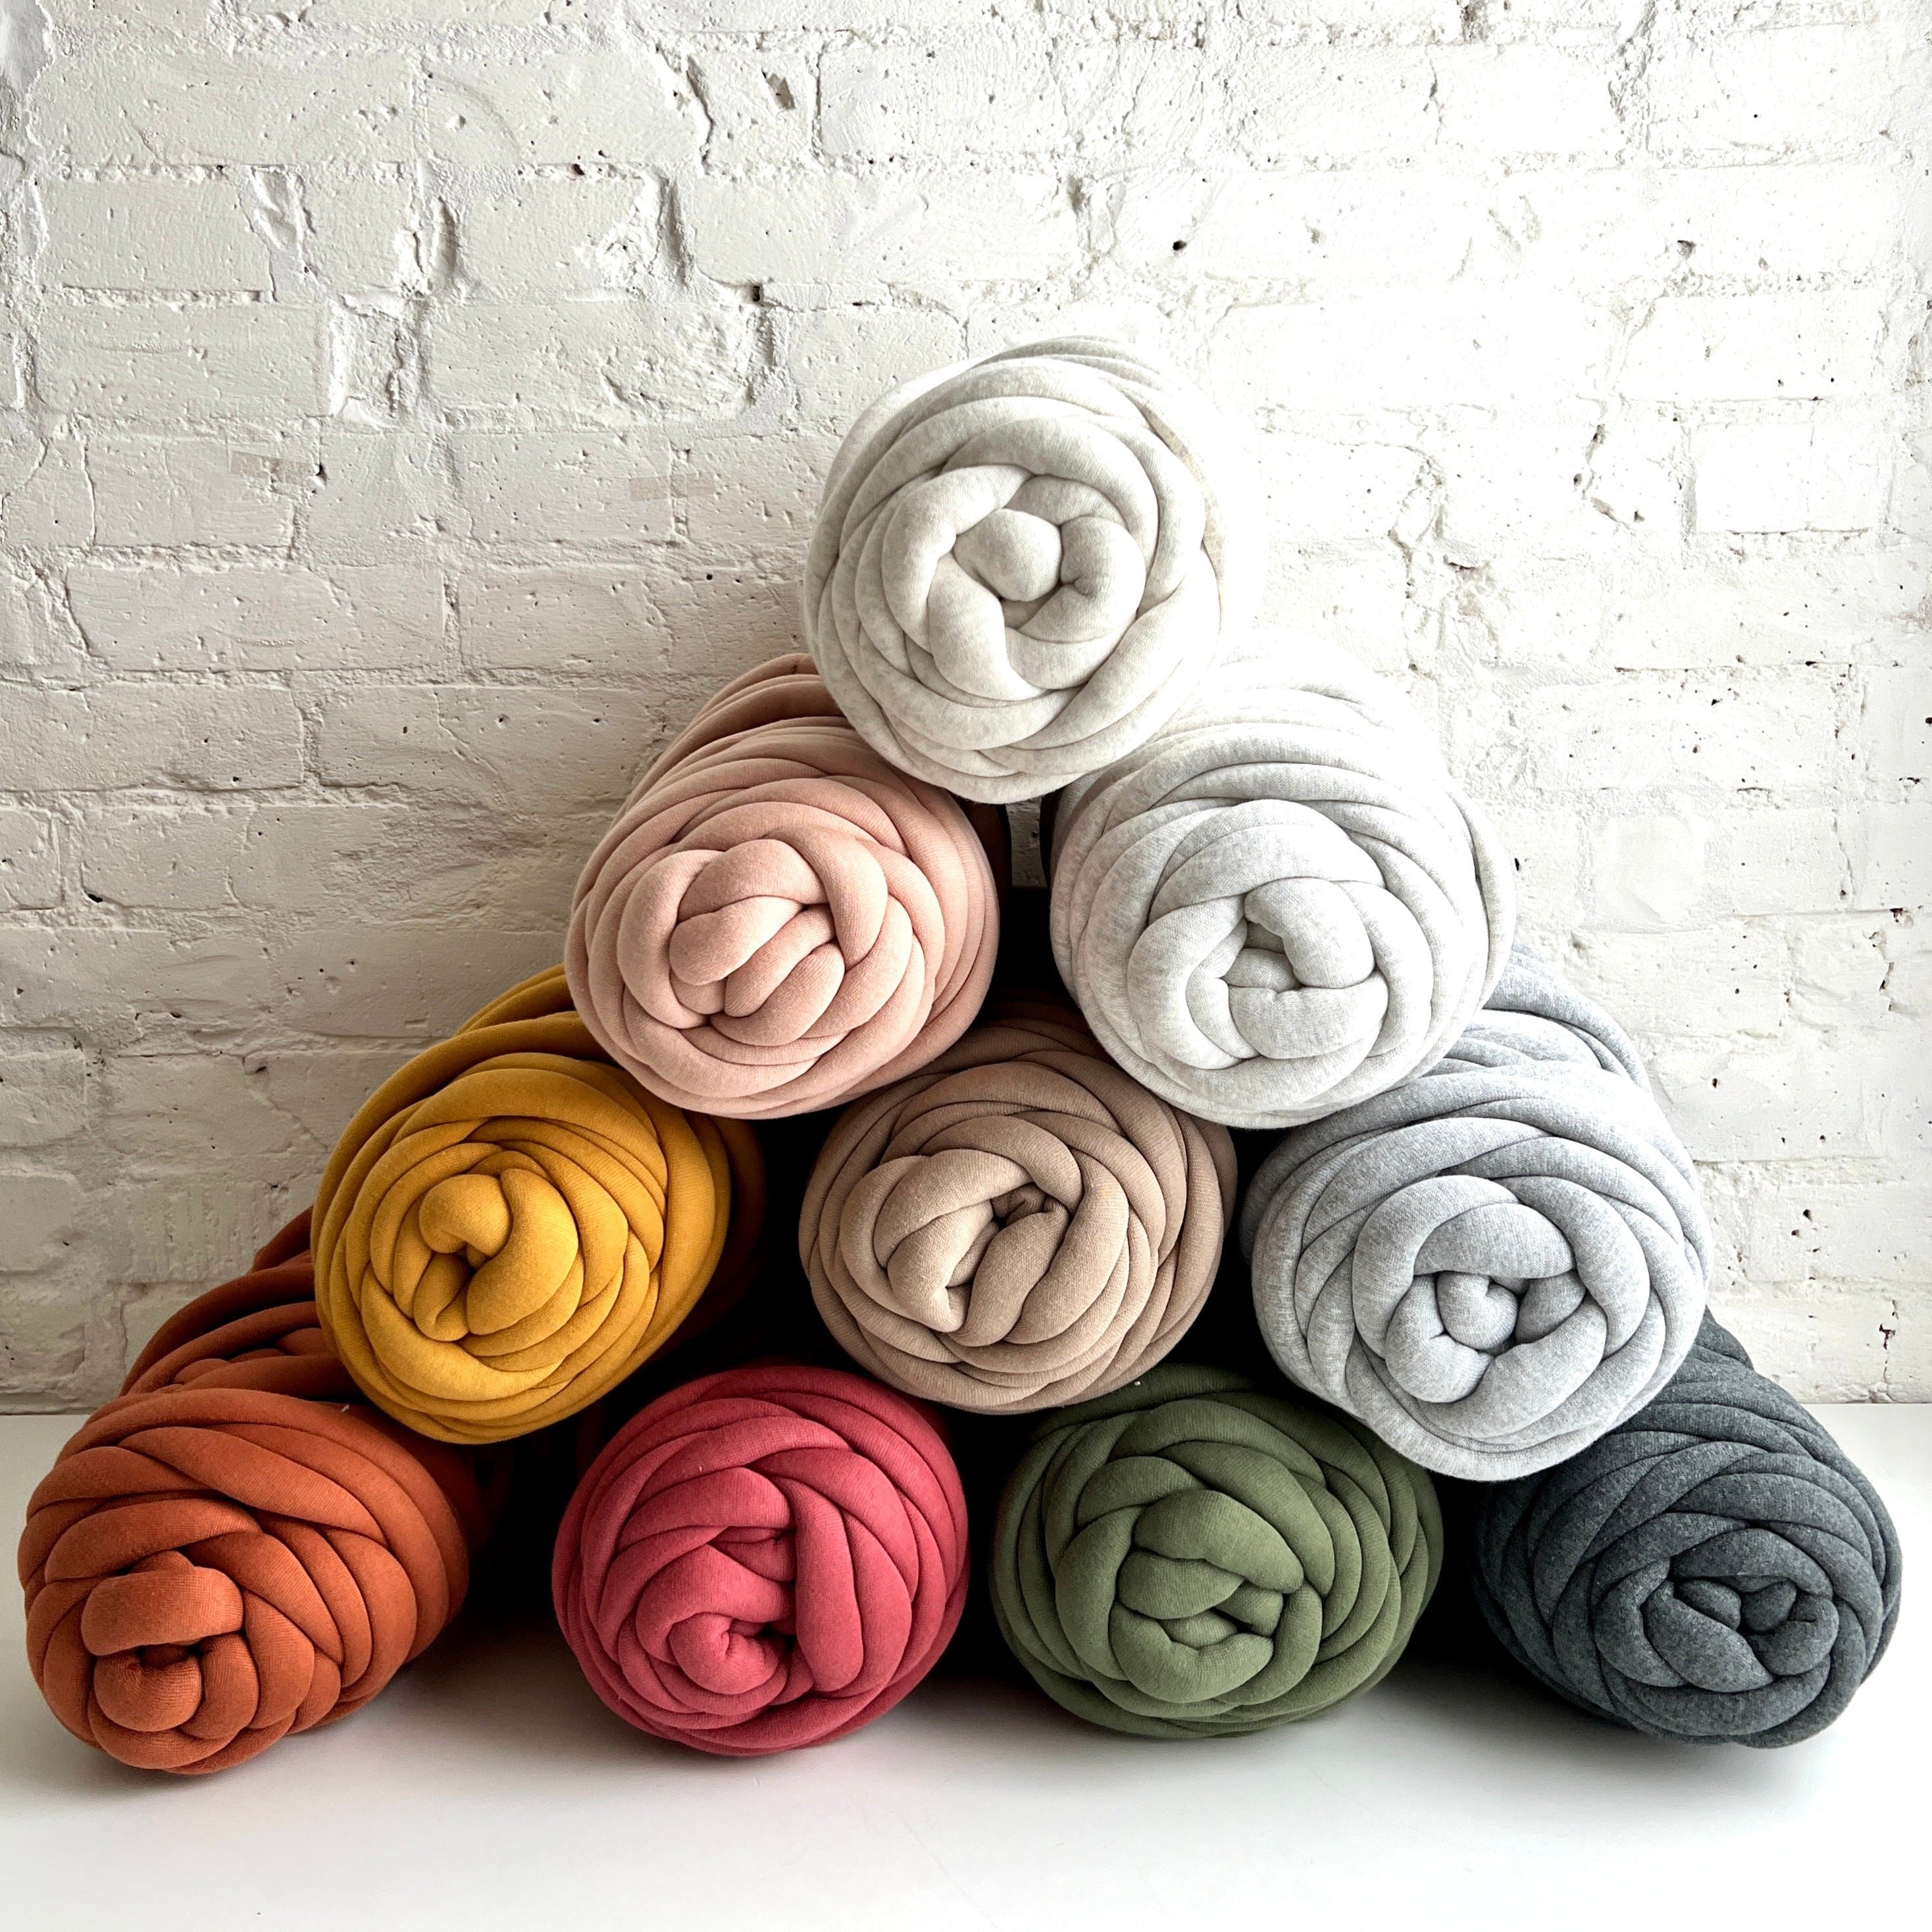 Find Quality Knitting Supplies at South Jordan Yarn Shops